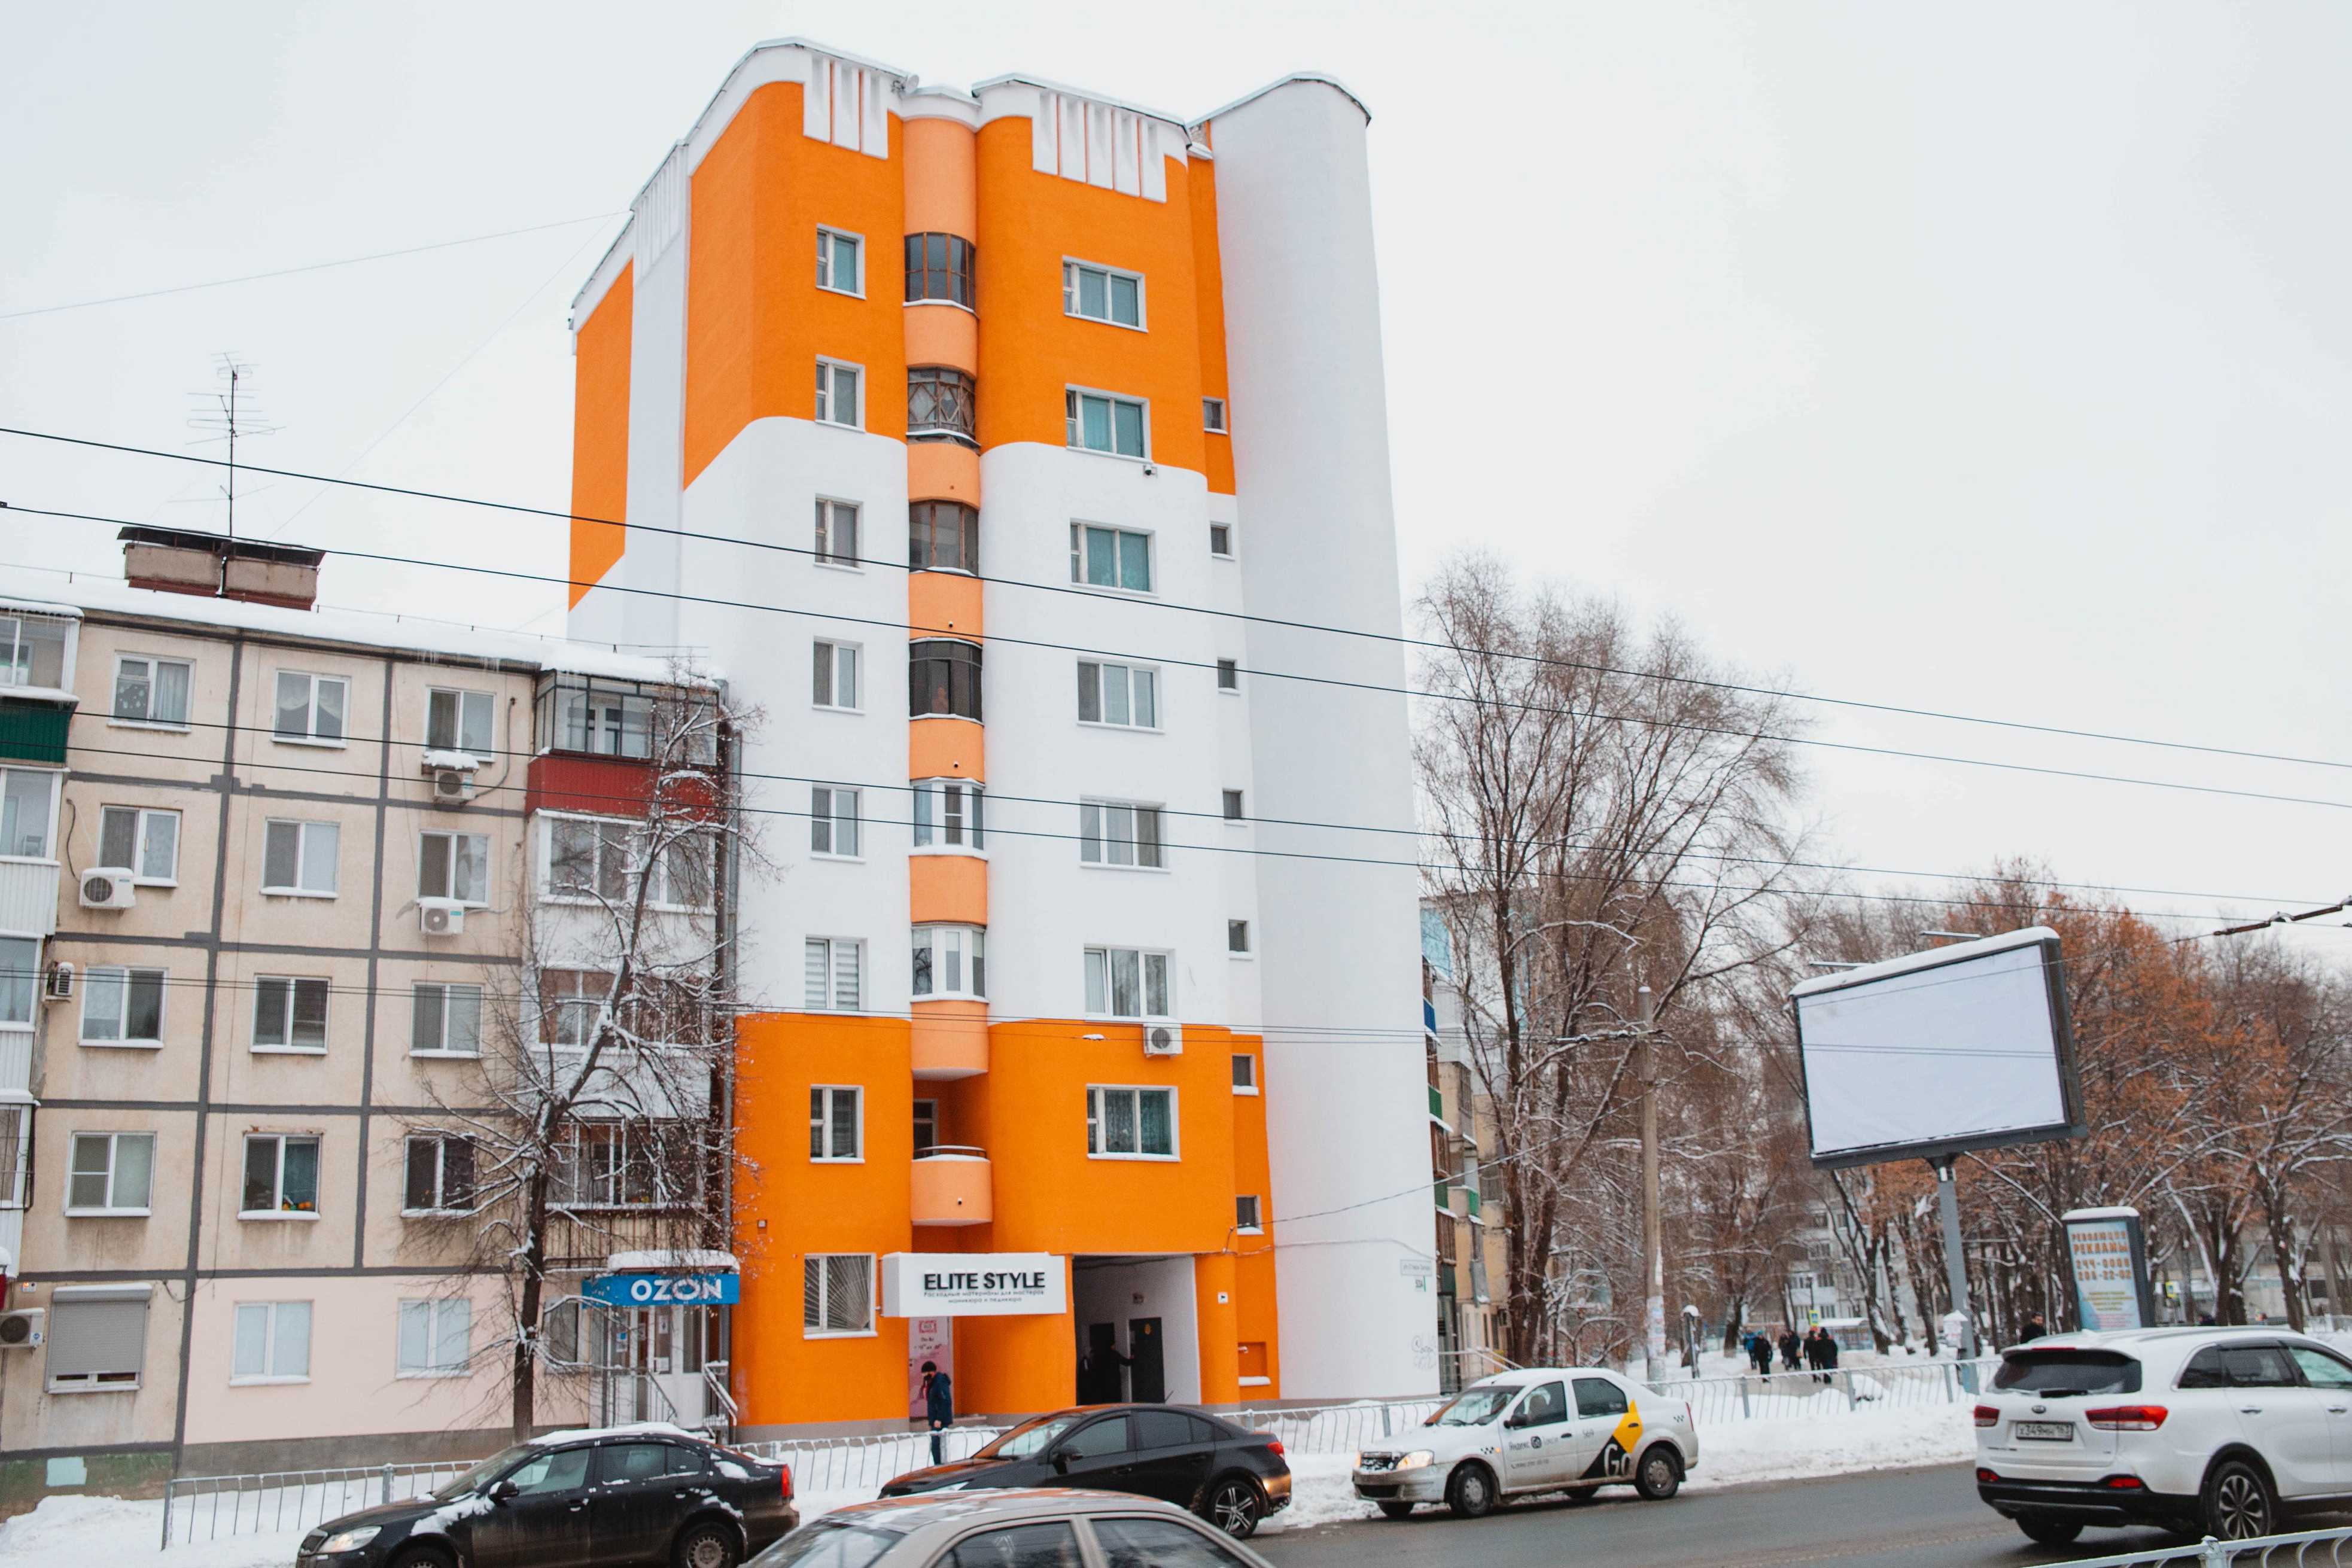 Дом станкостроителей на улице Стара-зАГОРА